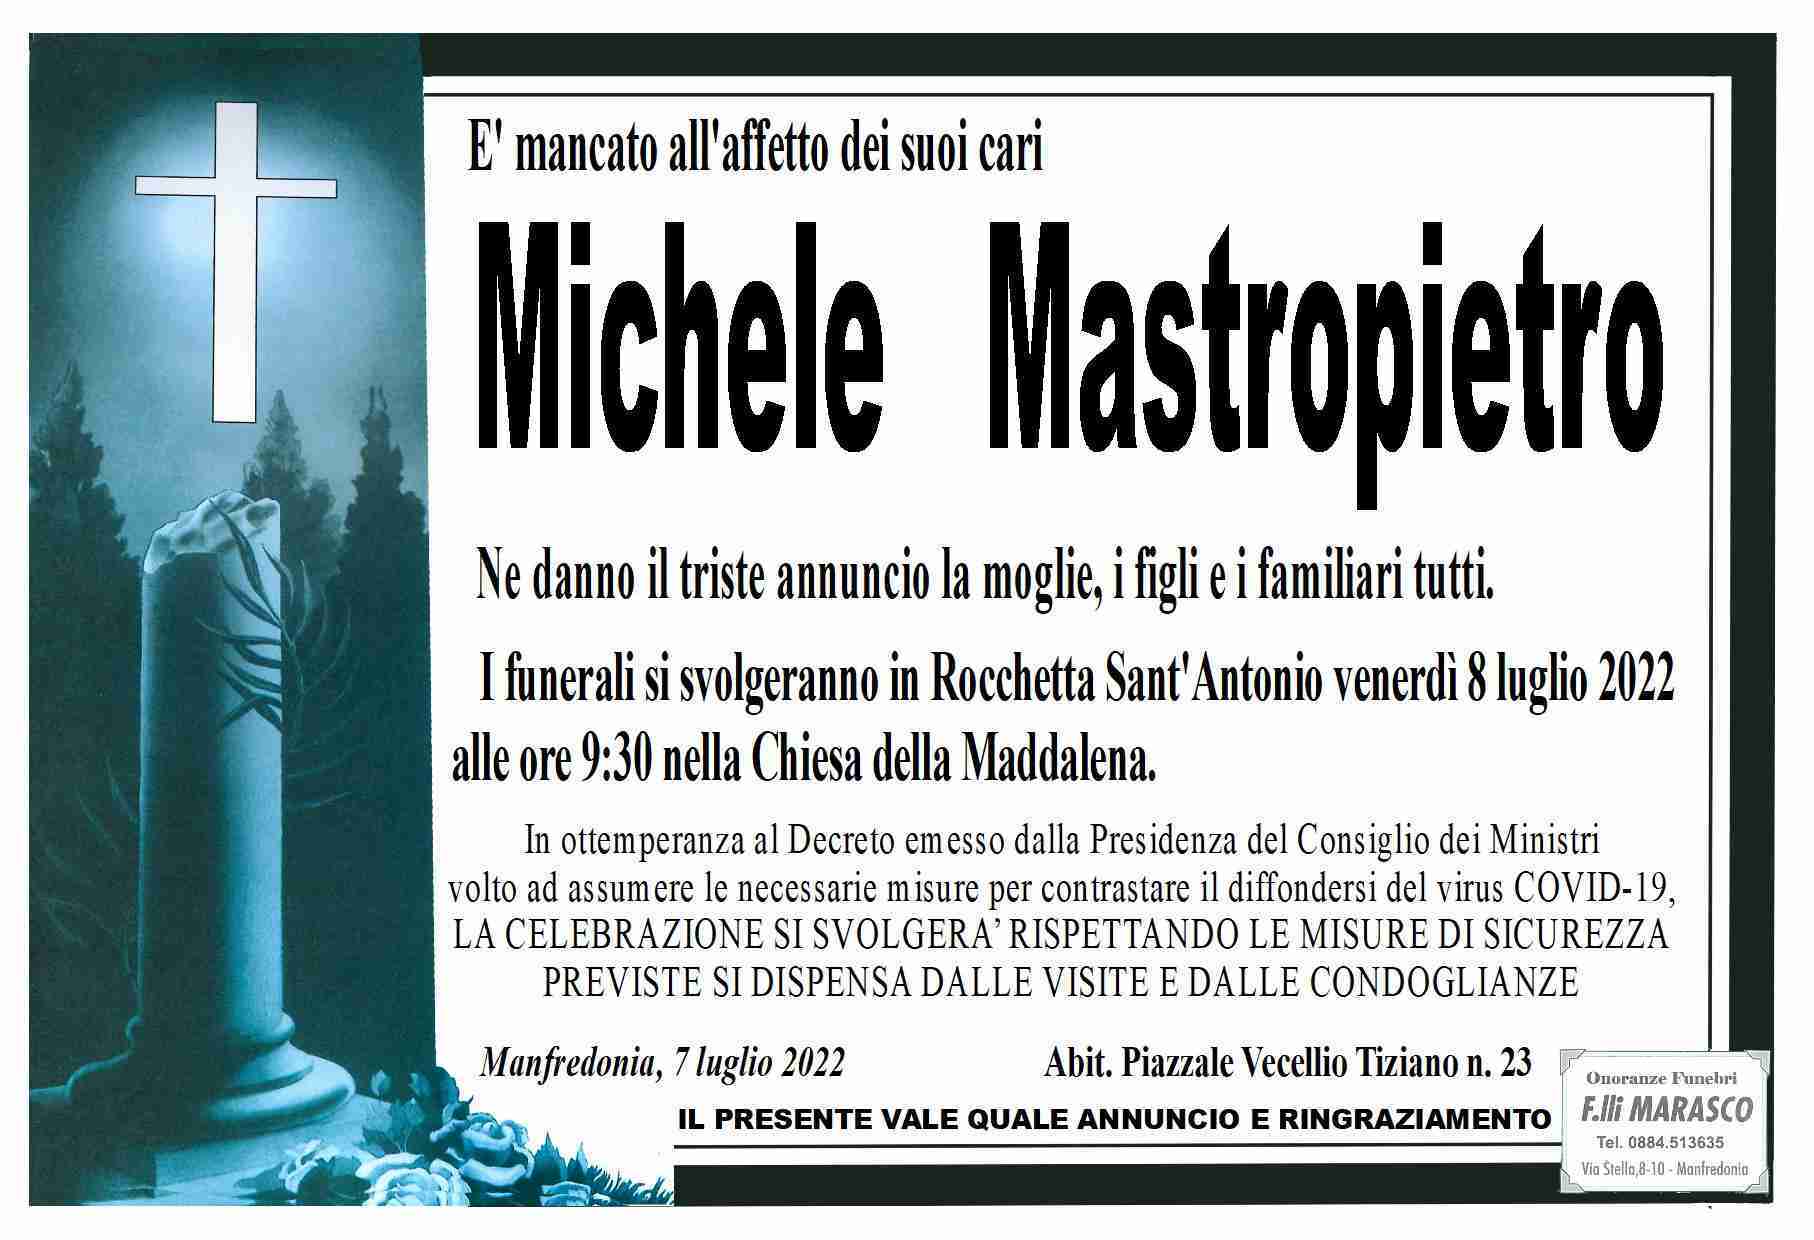 Michele Mastropietro